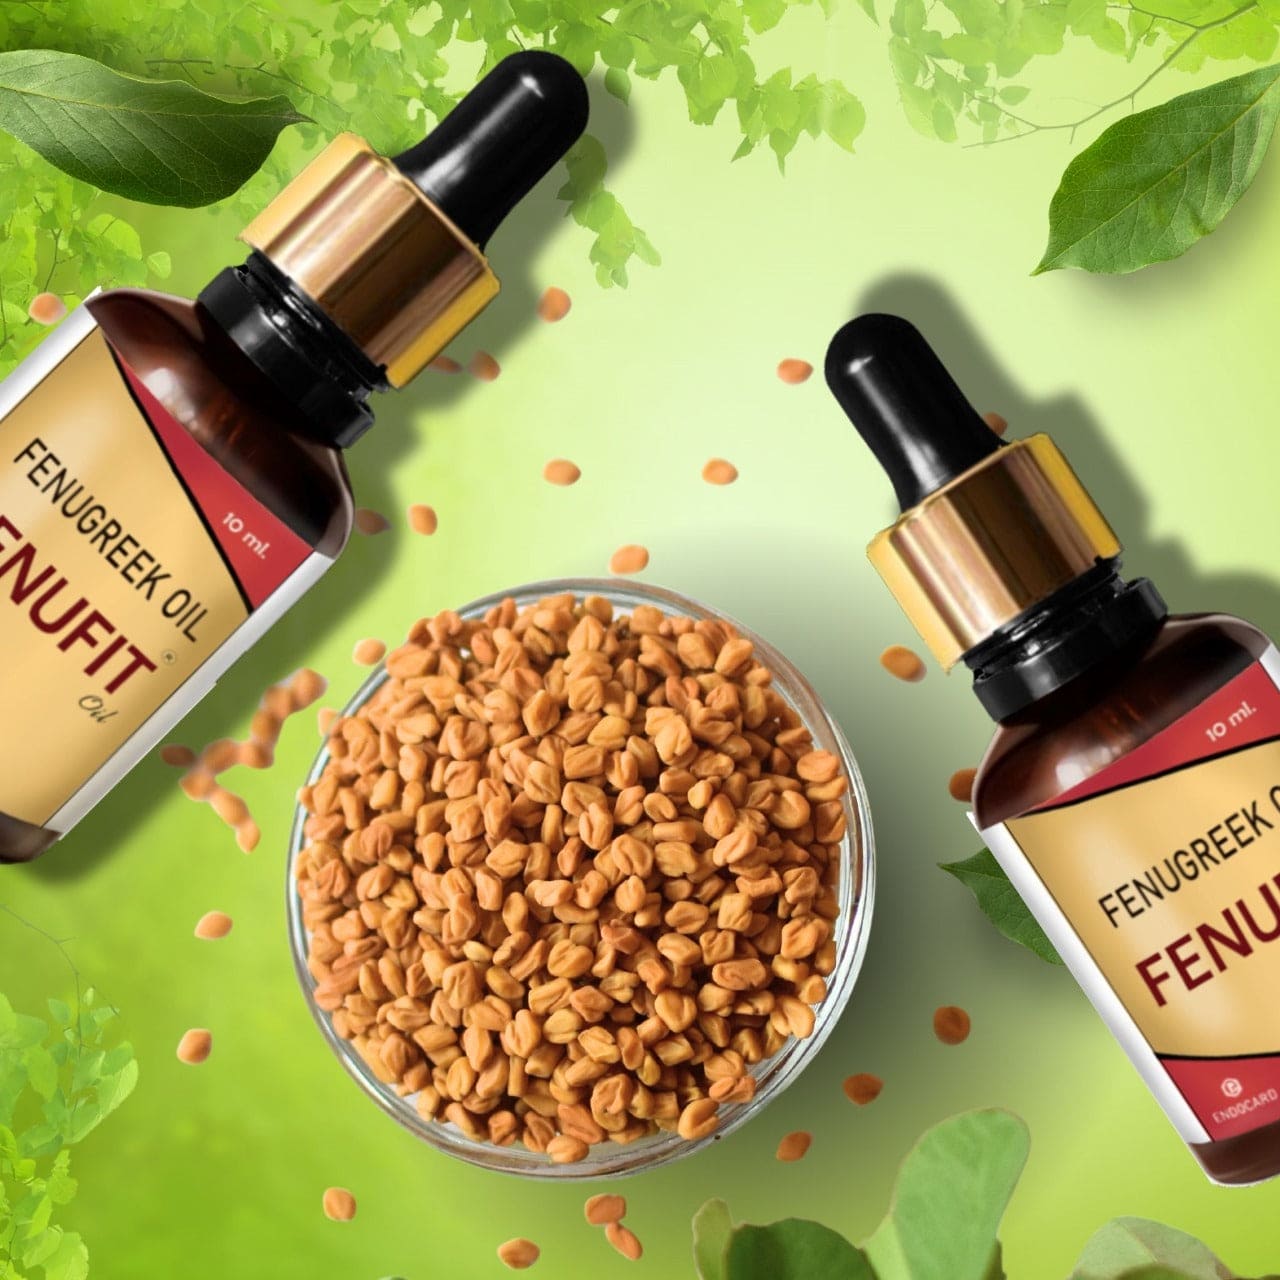 Fenufit Fenugreek Hair Oil for Hair Growth & Hair Fall Control